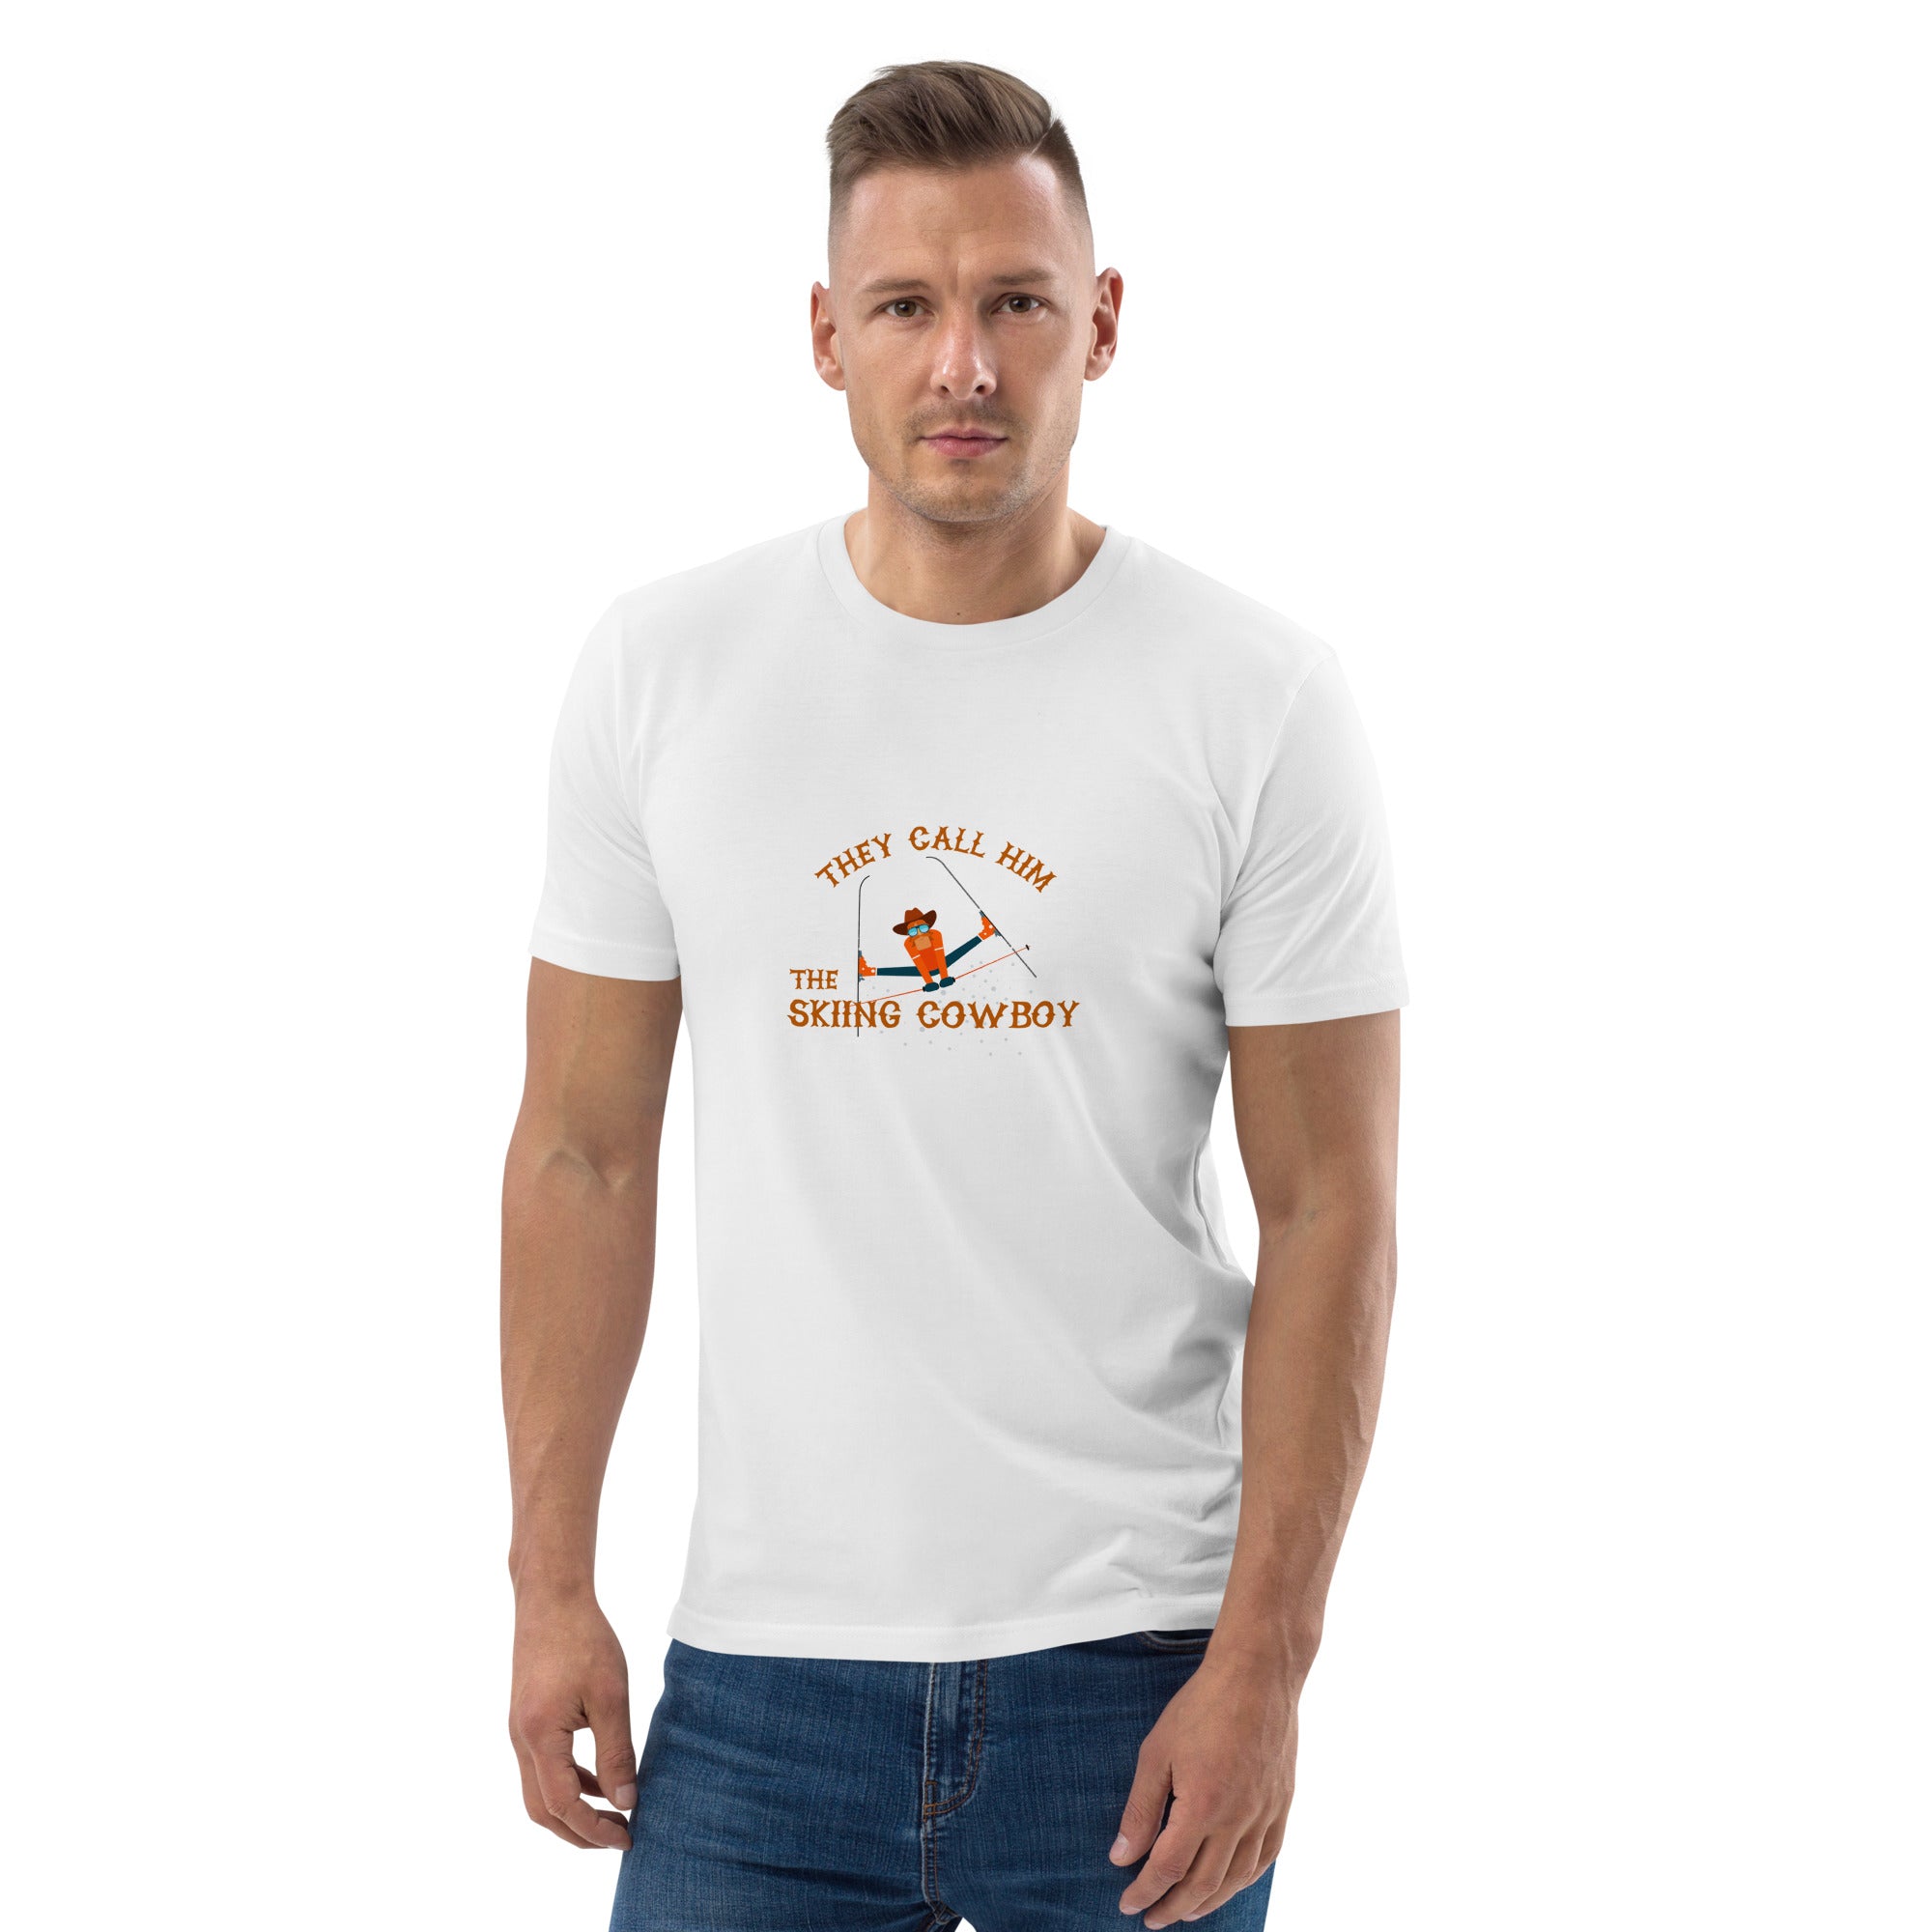 Unisex organic cotton t-shirt Hot Dogger on light colors